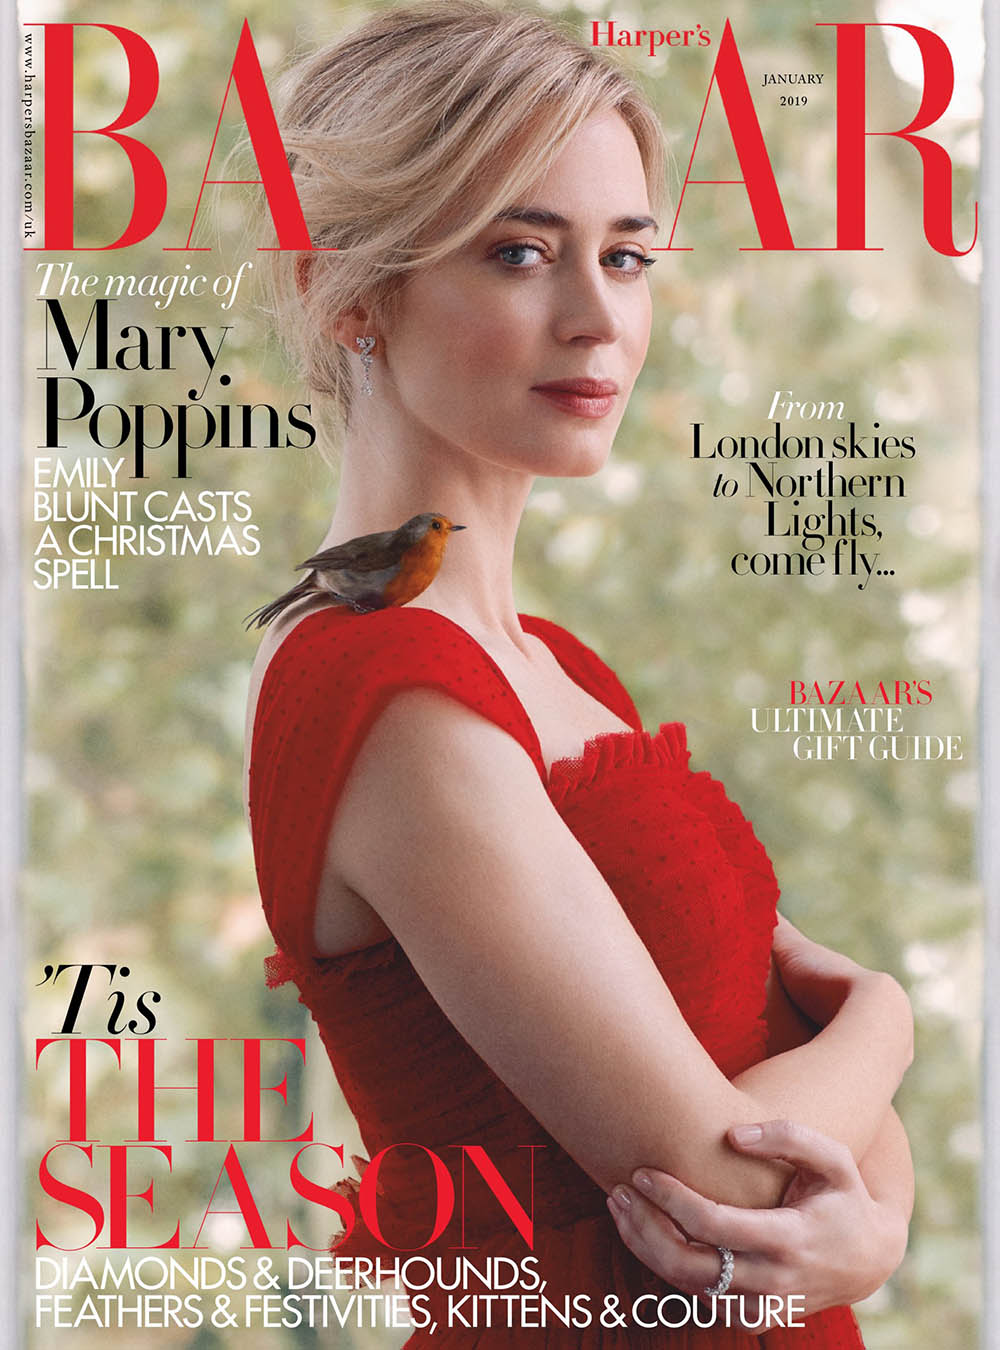 Emily-Blunt-covers-Harper’s-Bazaar-UK-January-2019-by-Richard-Phibbs-1.jpg